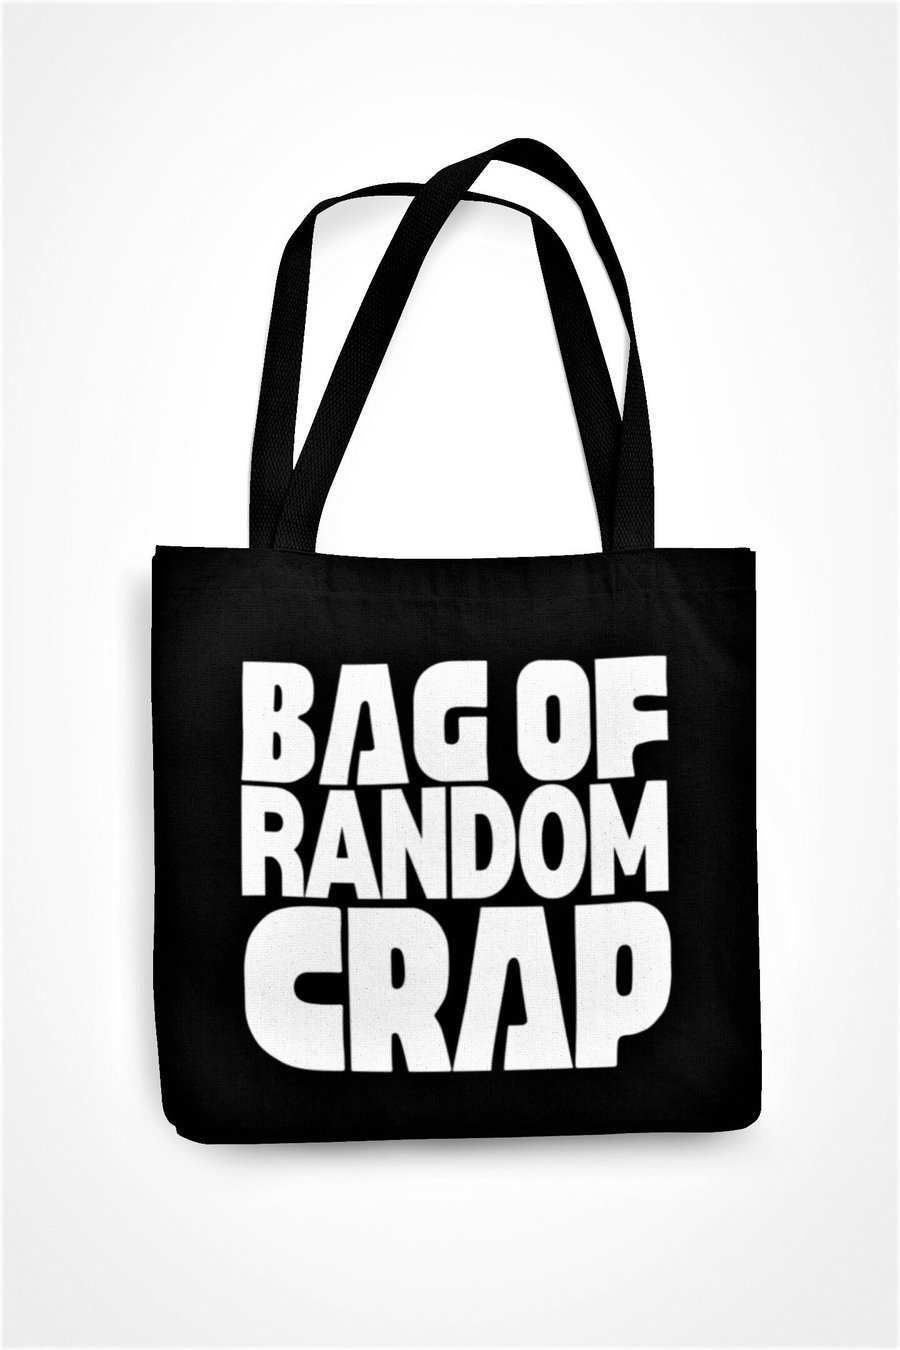 Bag Of Random Crap Tote Bag Funny Sassy Bag Birthday Present For Friend Family -